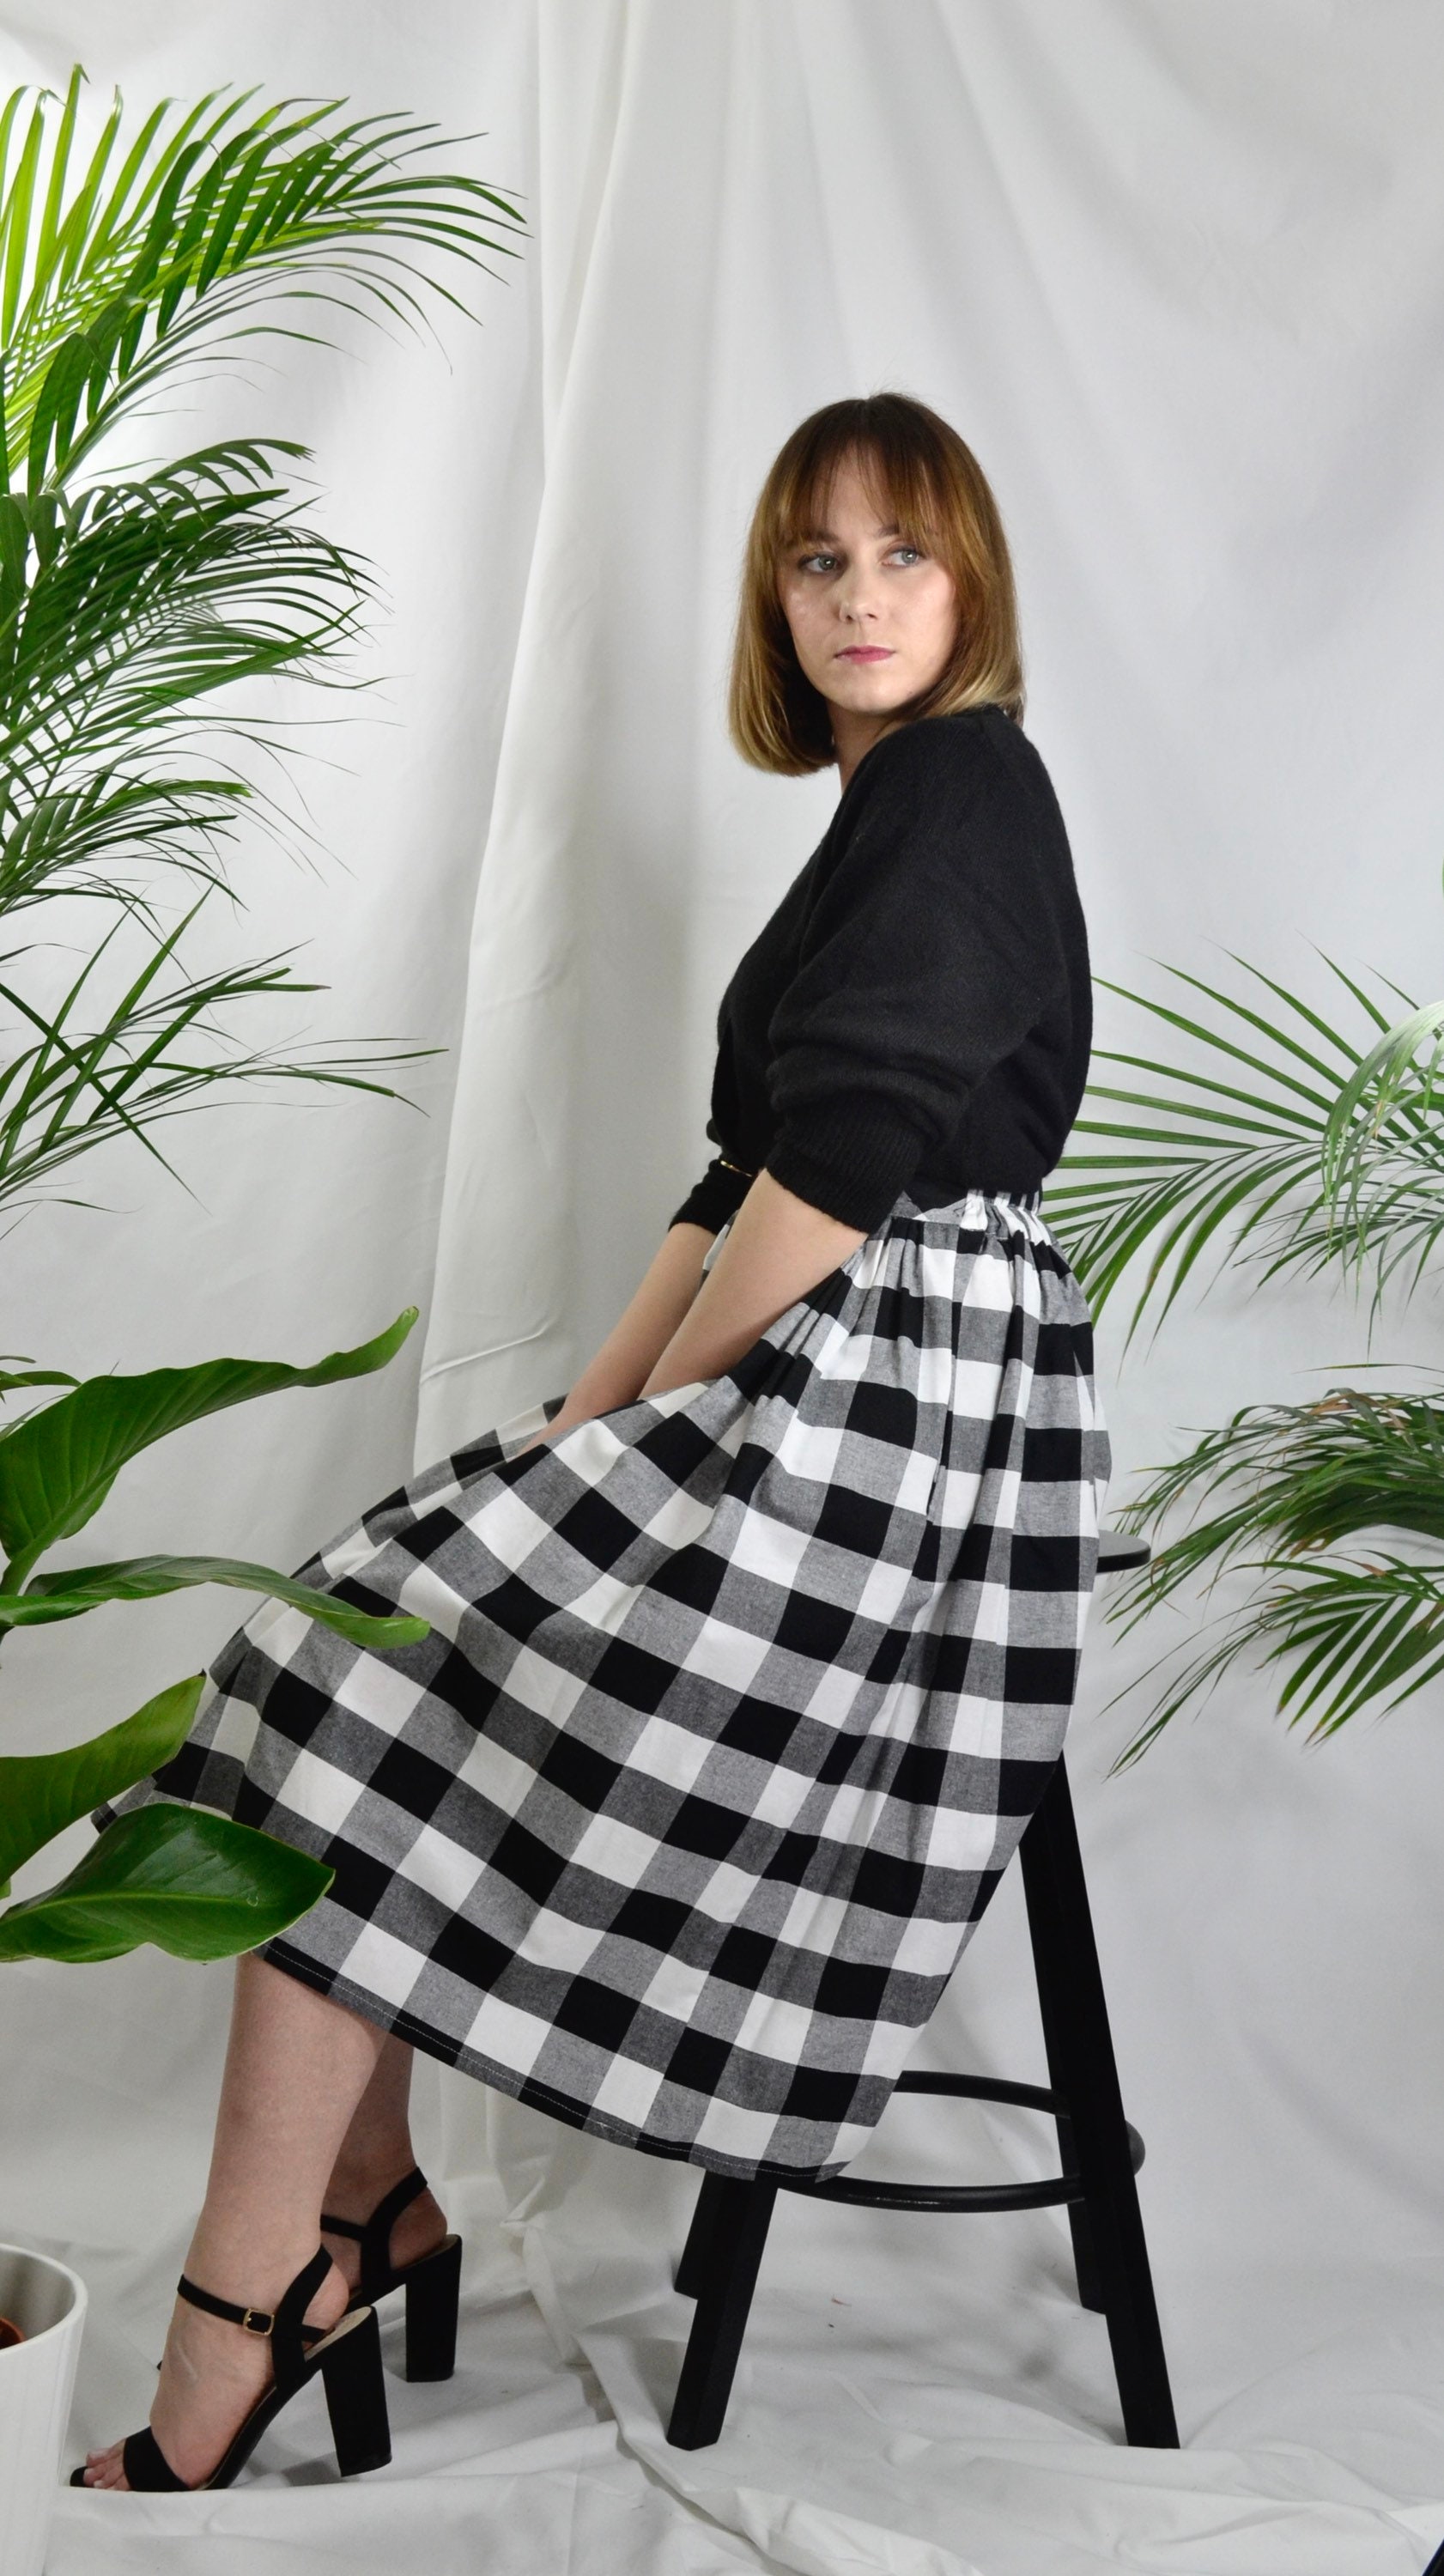 Black and White Check, Gingham Skirt, 100% Cotton, Full Gathered Midi Skirt,  Classic Casual Style Skirt. - Etsy